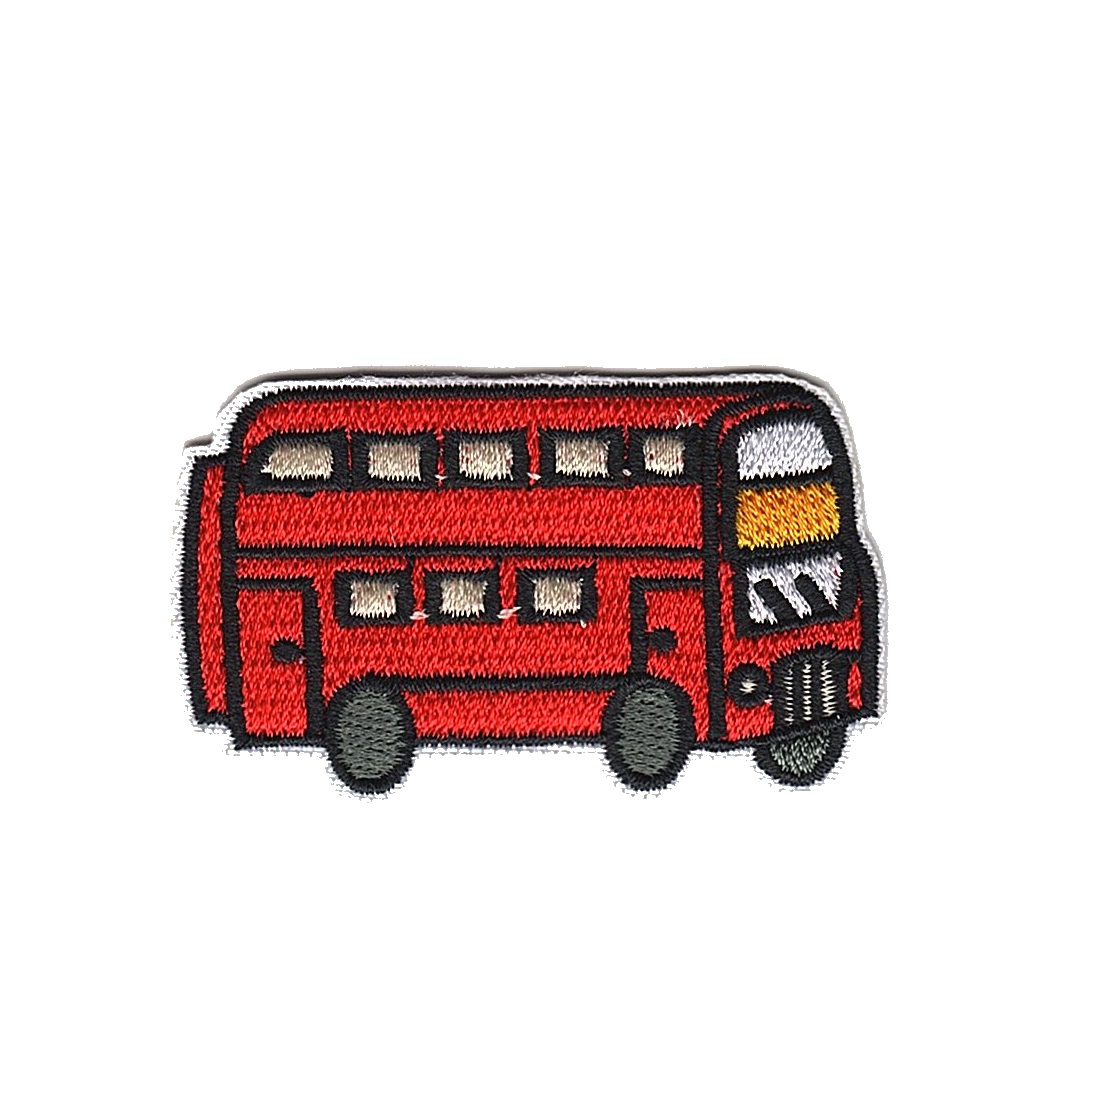 Buss (Röd)